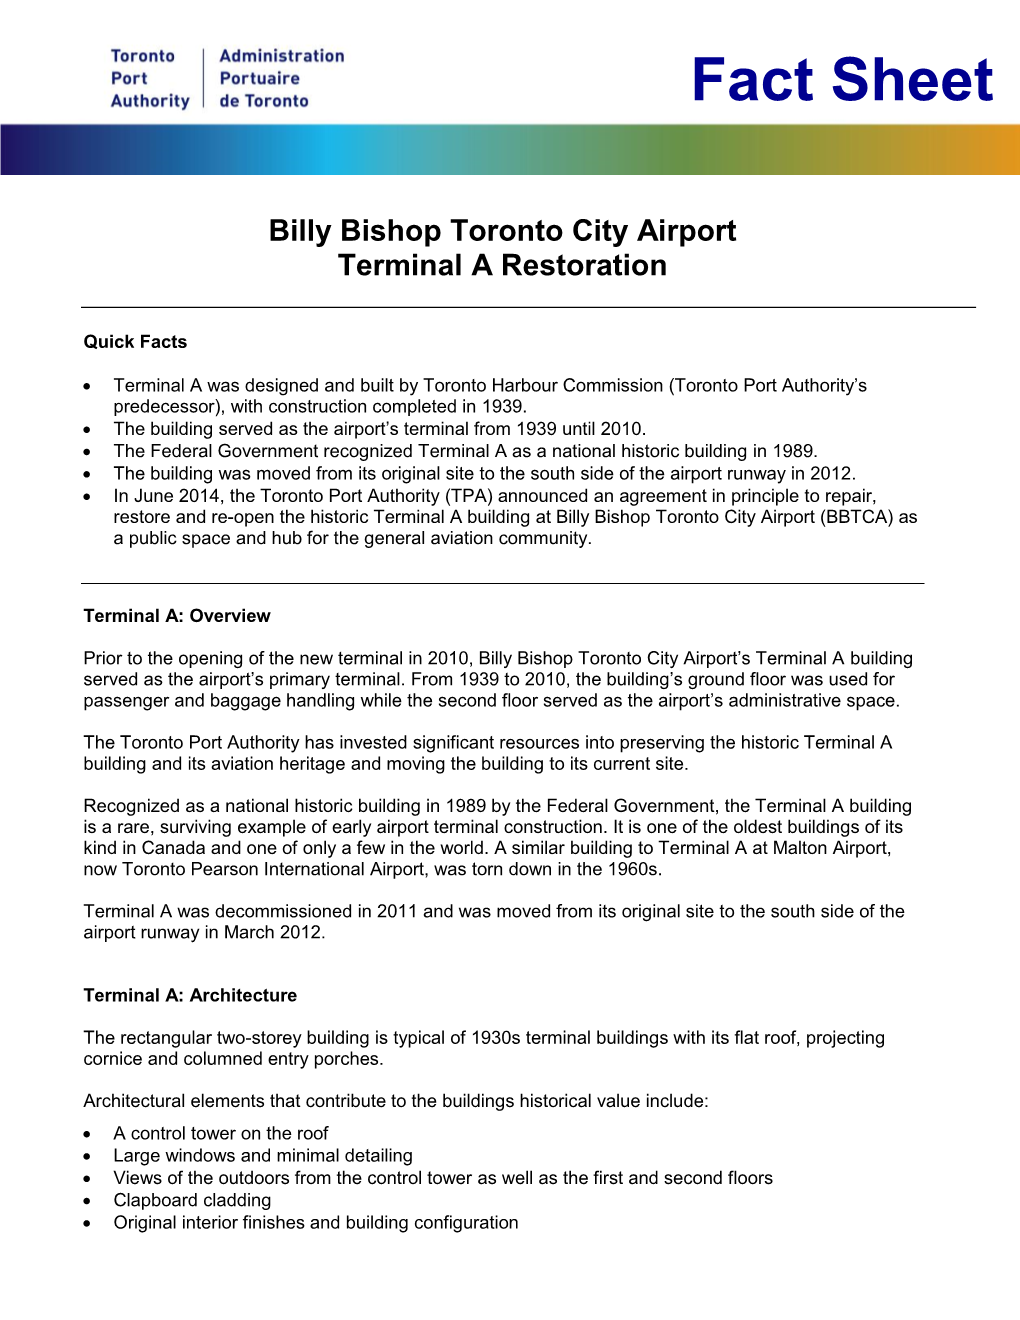 Fact Sheet Billy Bishop Toronto City Airport Terminal A